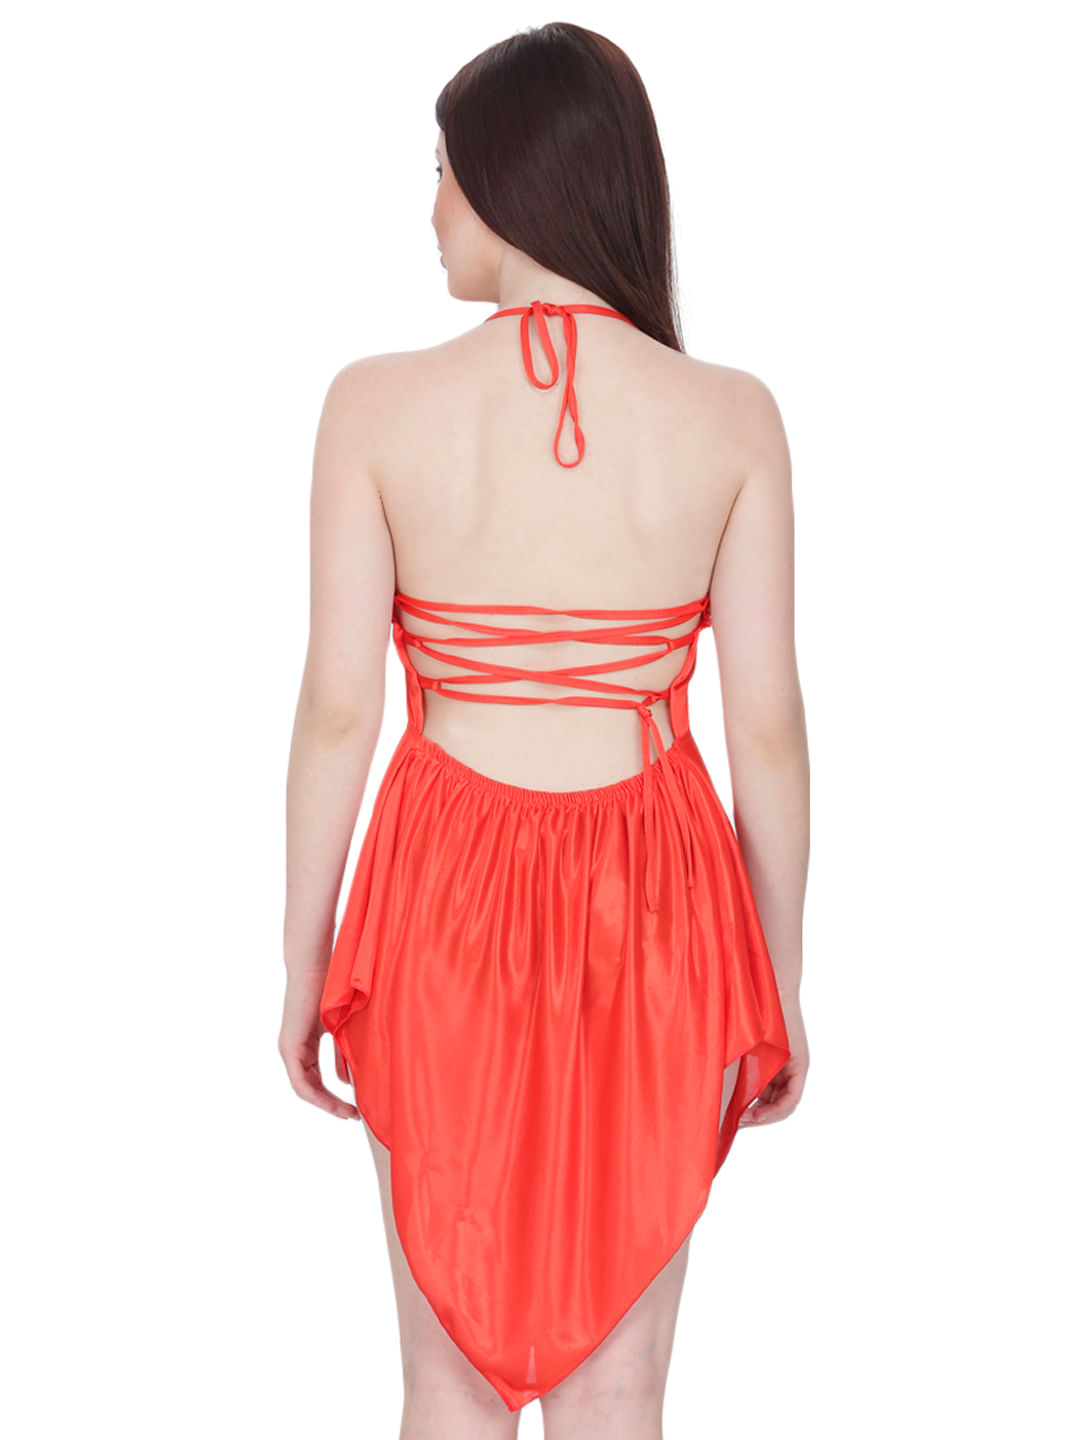 Satin Babydoll Dress (Red, Free Size)